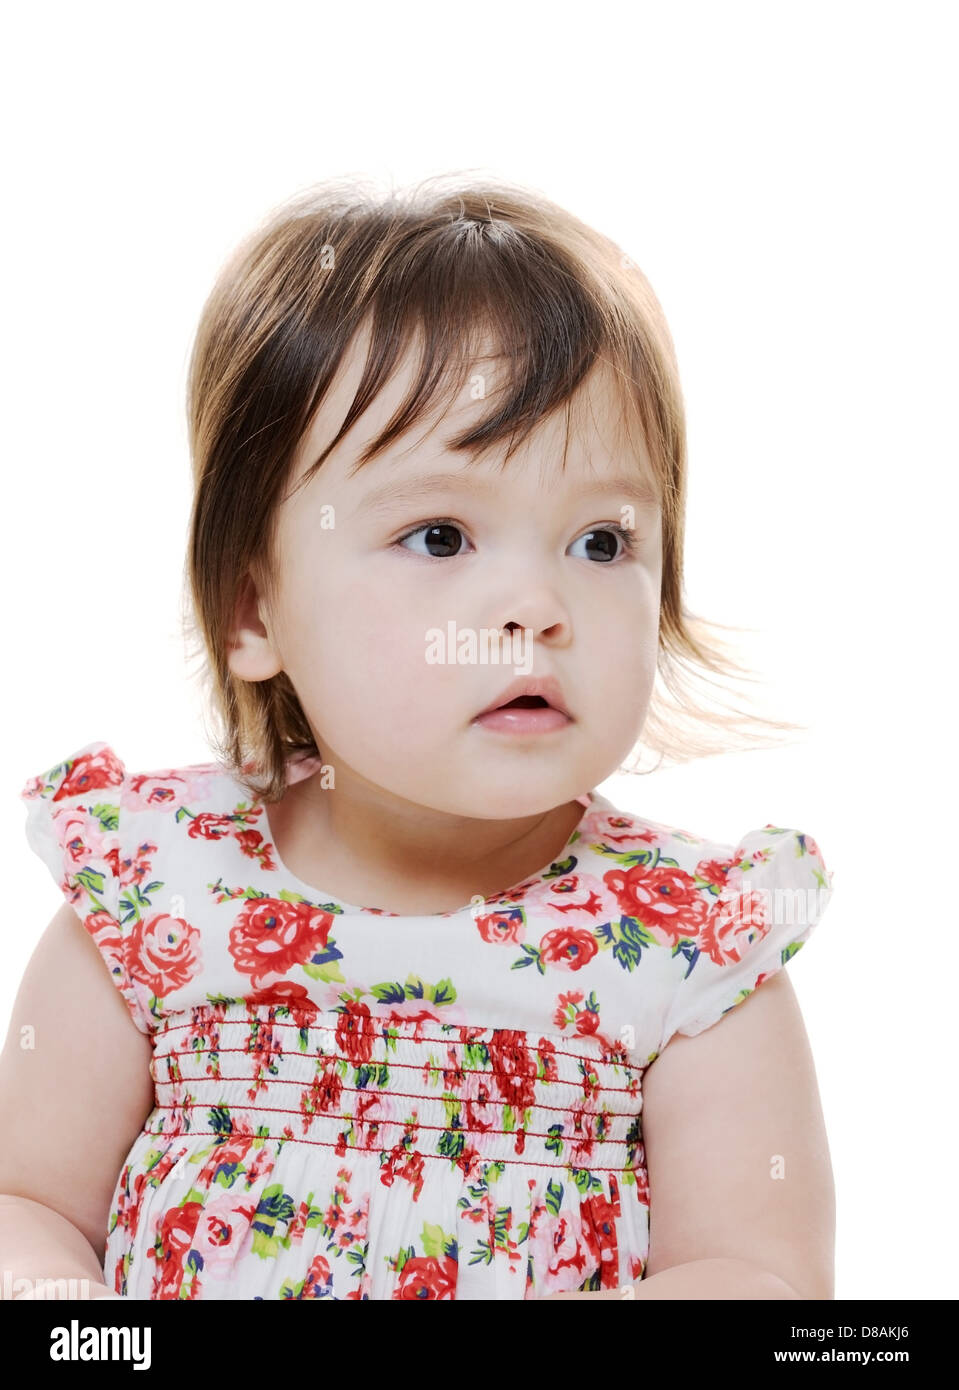 Young infant girl closeup portrait Stock Photo